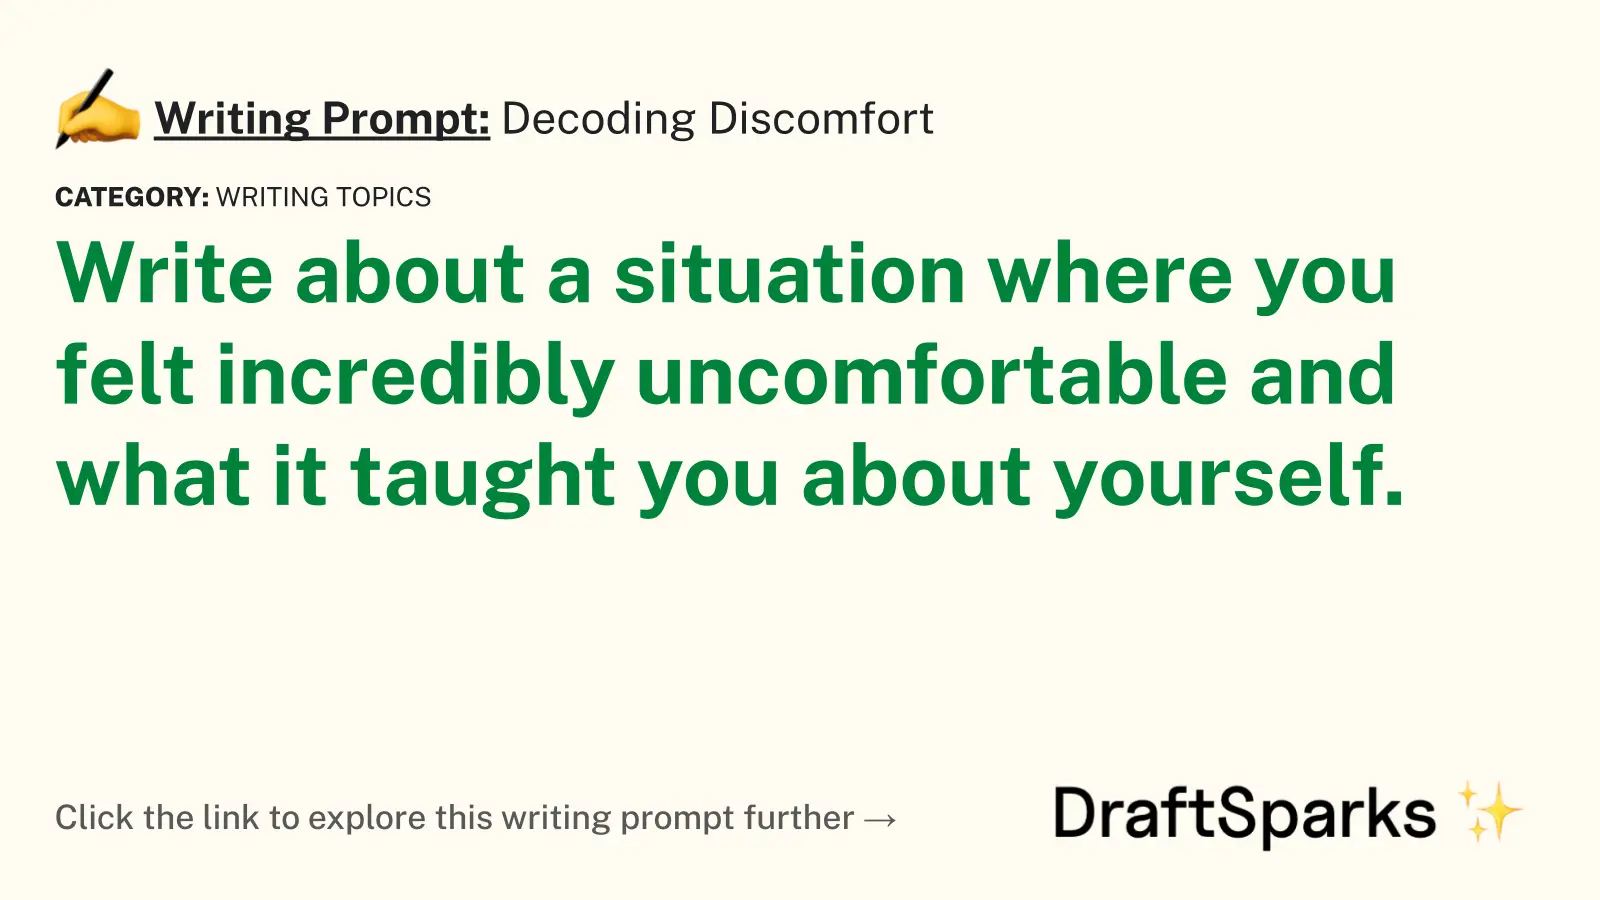 Decoding Discomfort